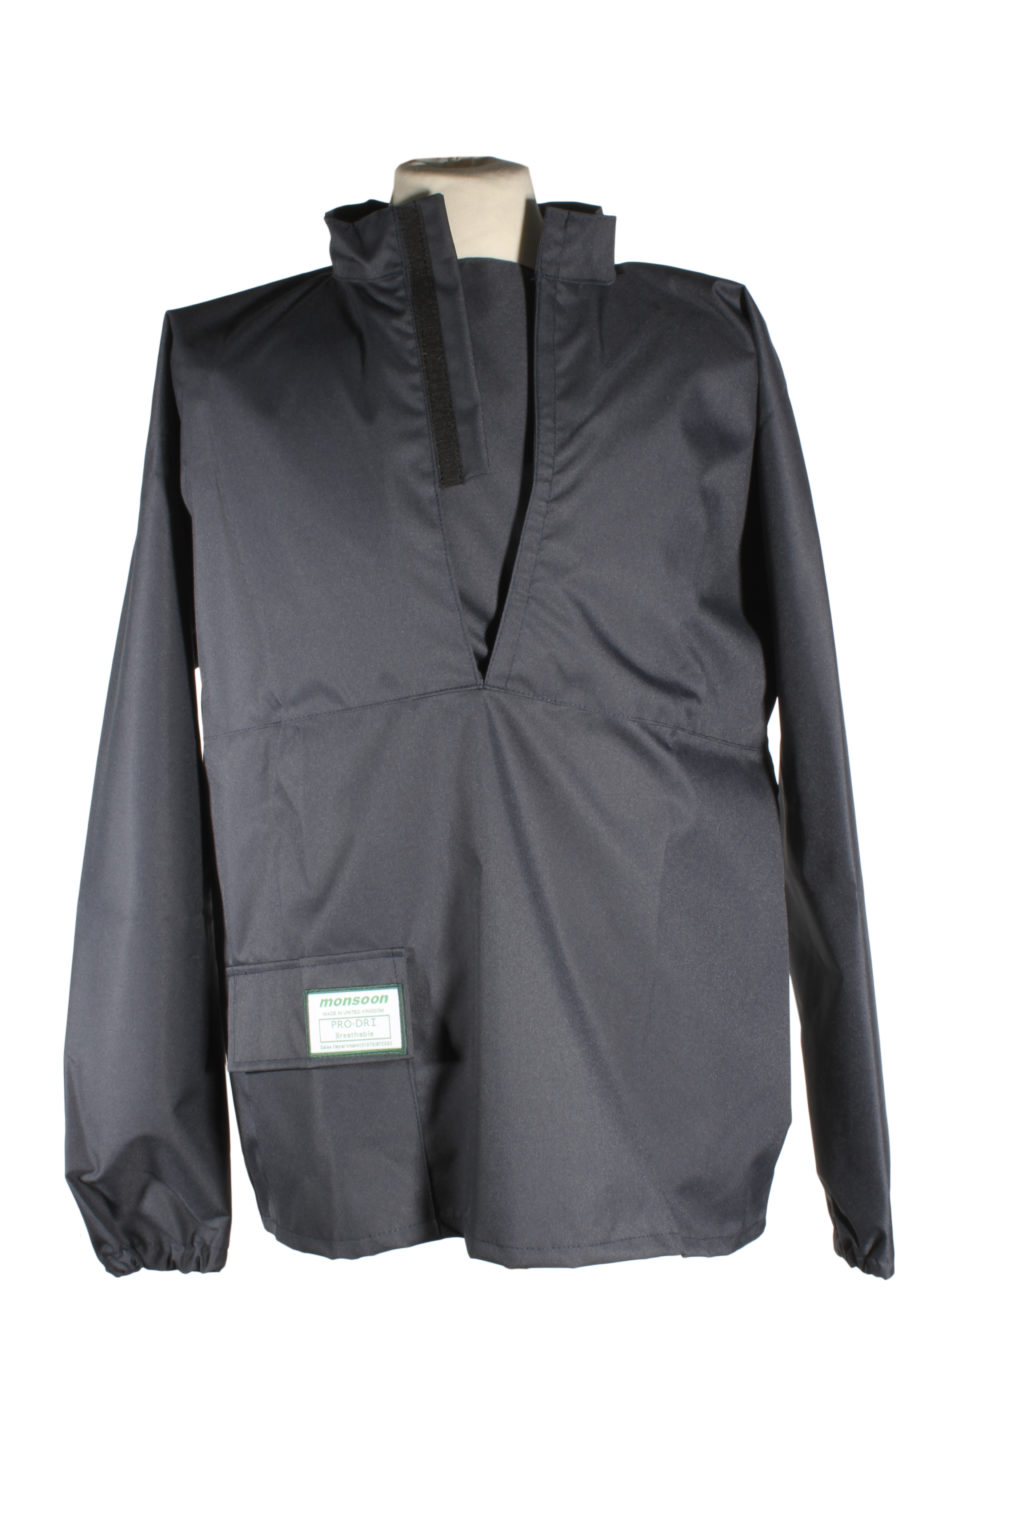 Monsoon Pro Dri Parlour Jacket Navy Long Sleeve